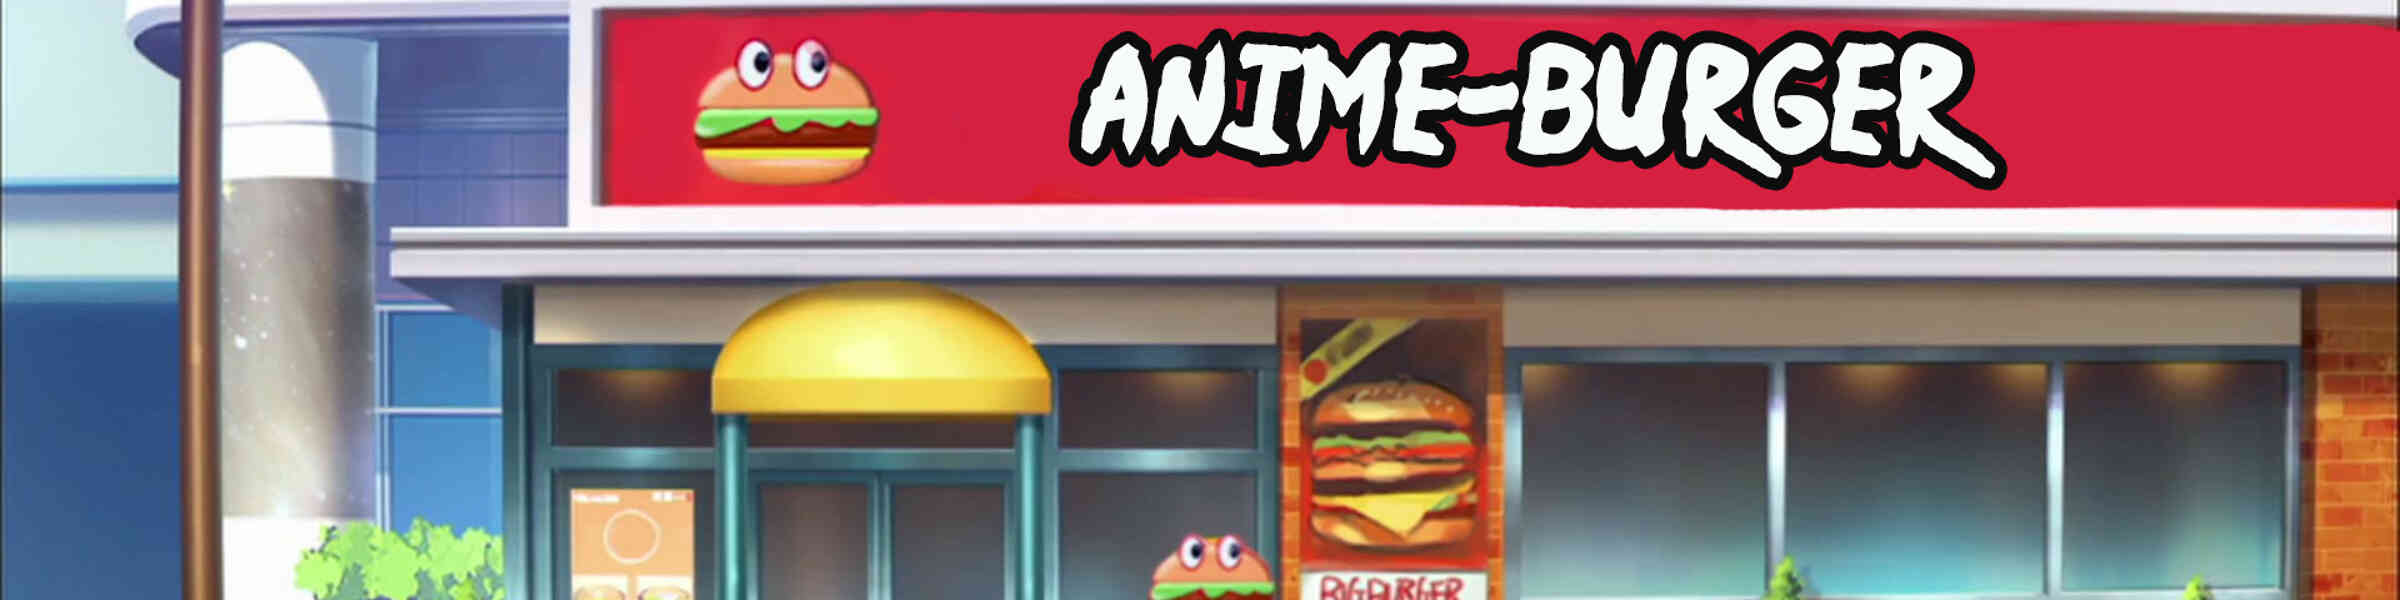 Anime Girls Eating Burgers on X: 